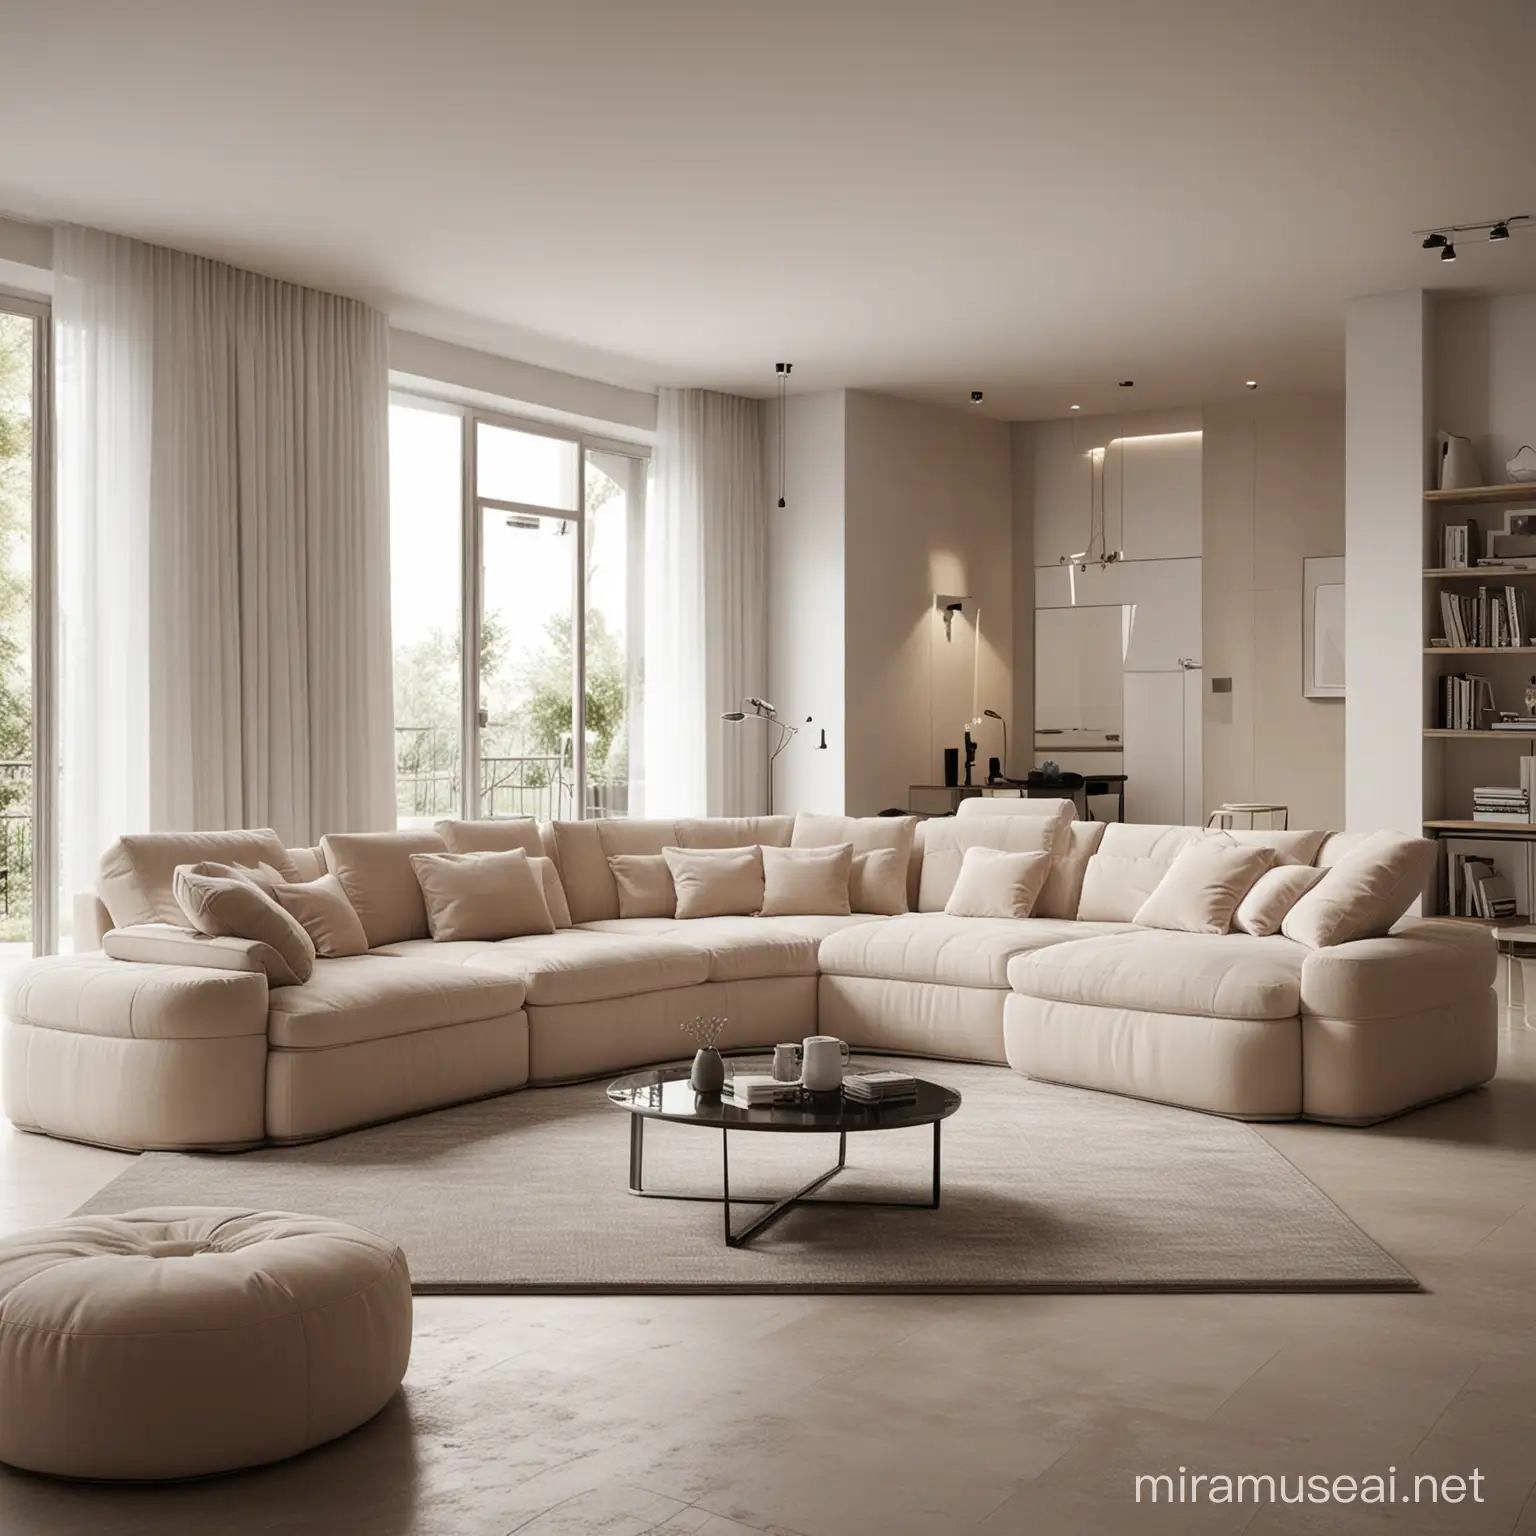 Futuristic Modular Sofa for 4 with Elegance and Comfort